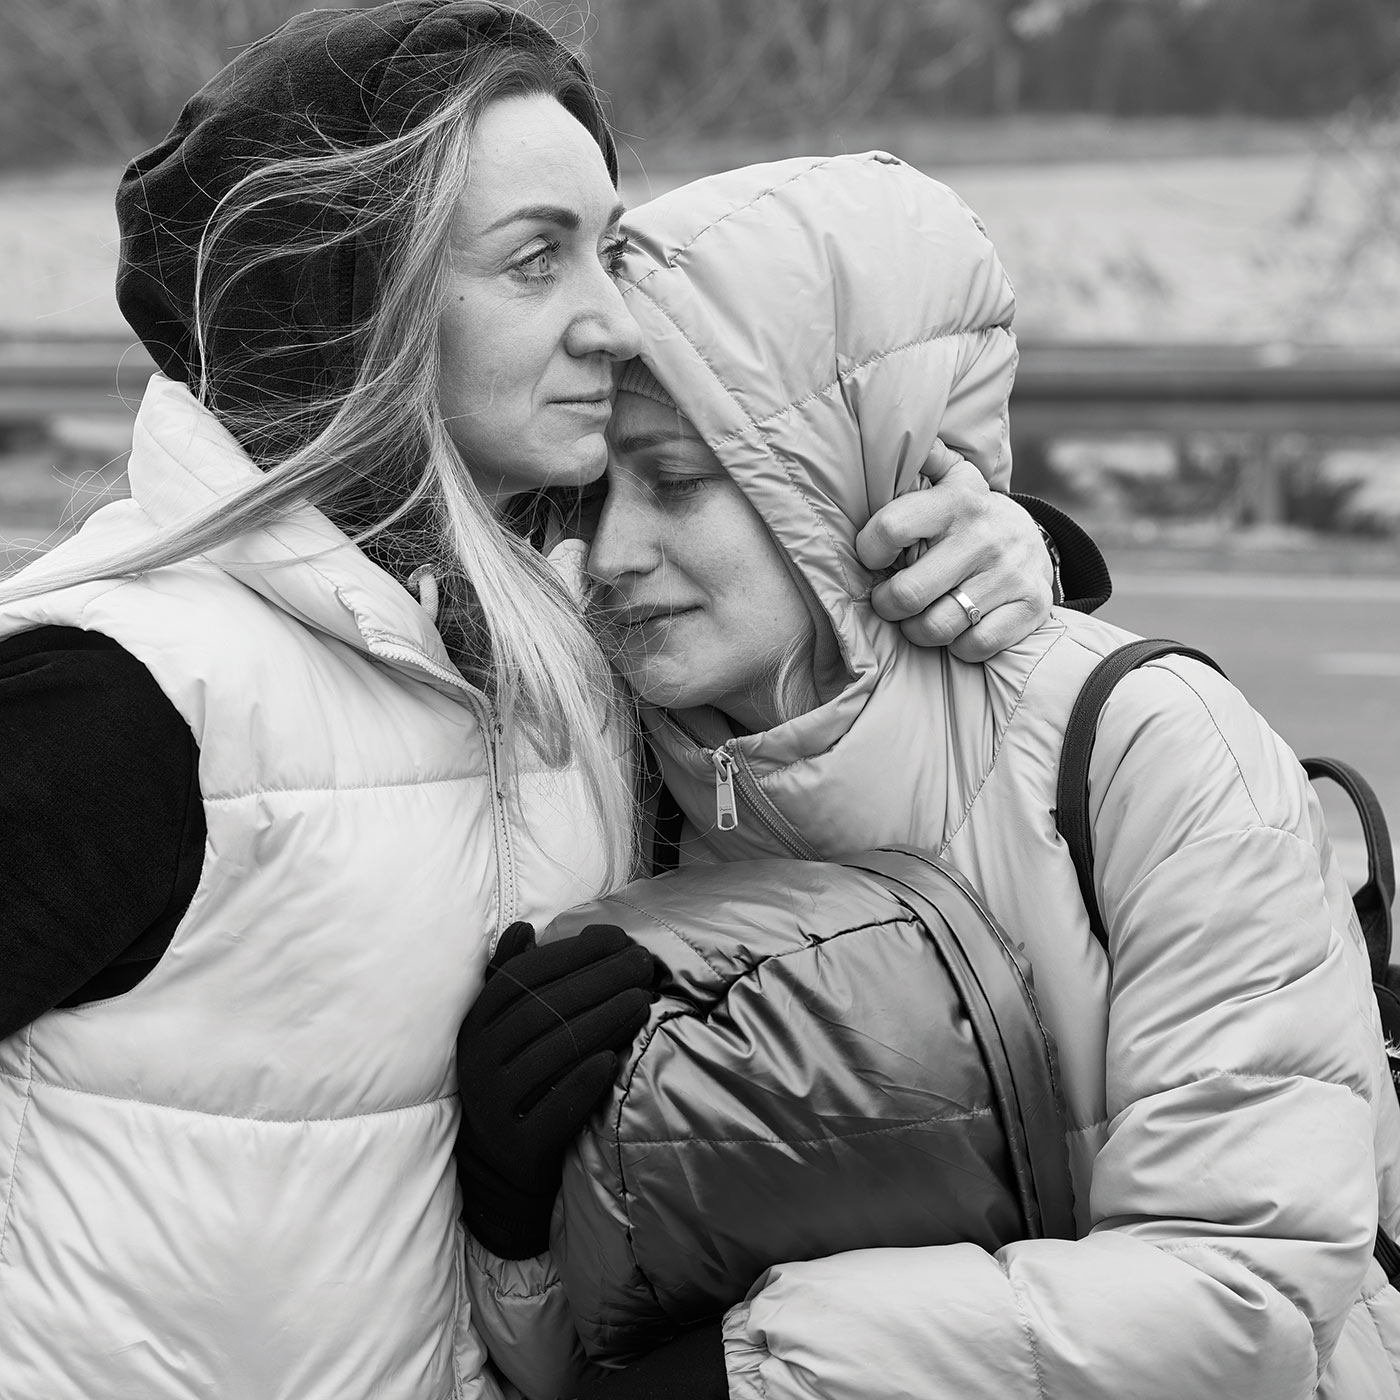 Image of two Ukrainian women embracing